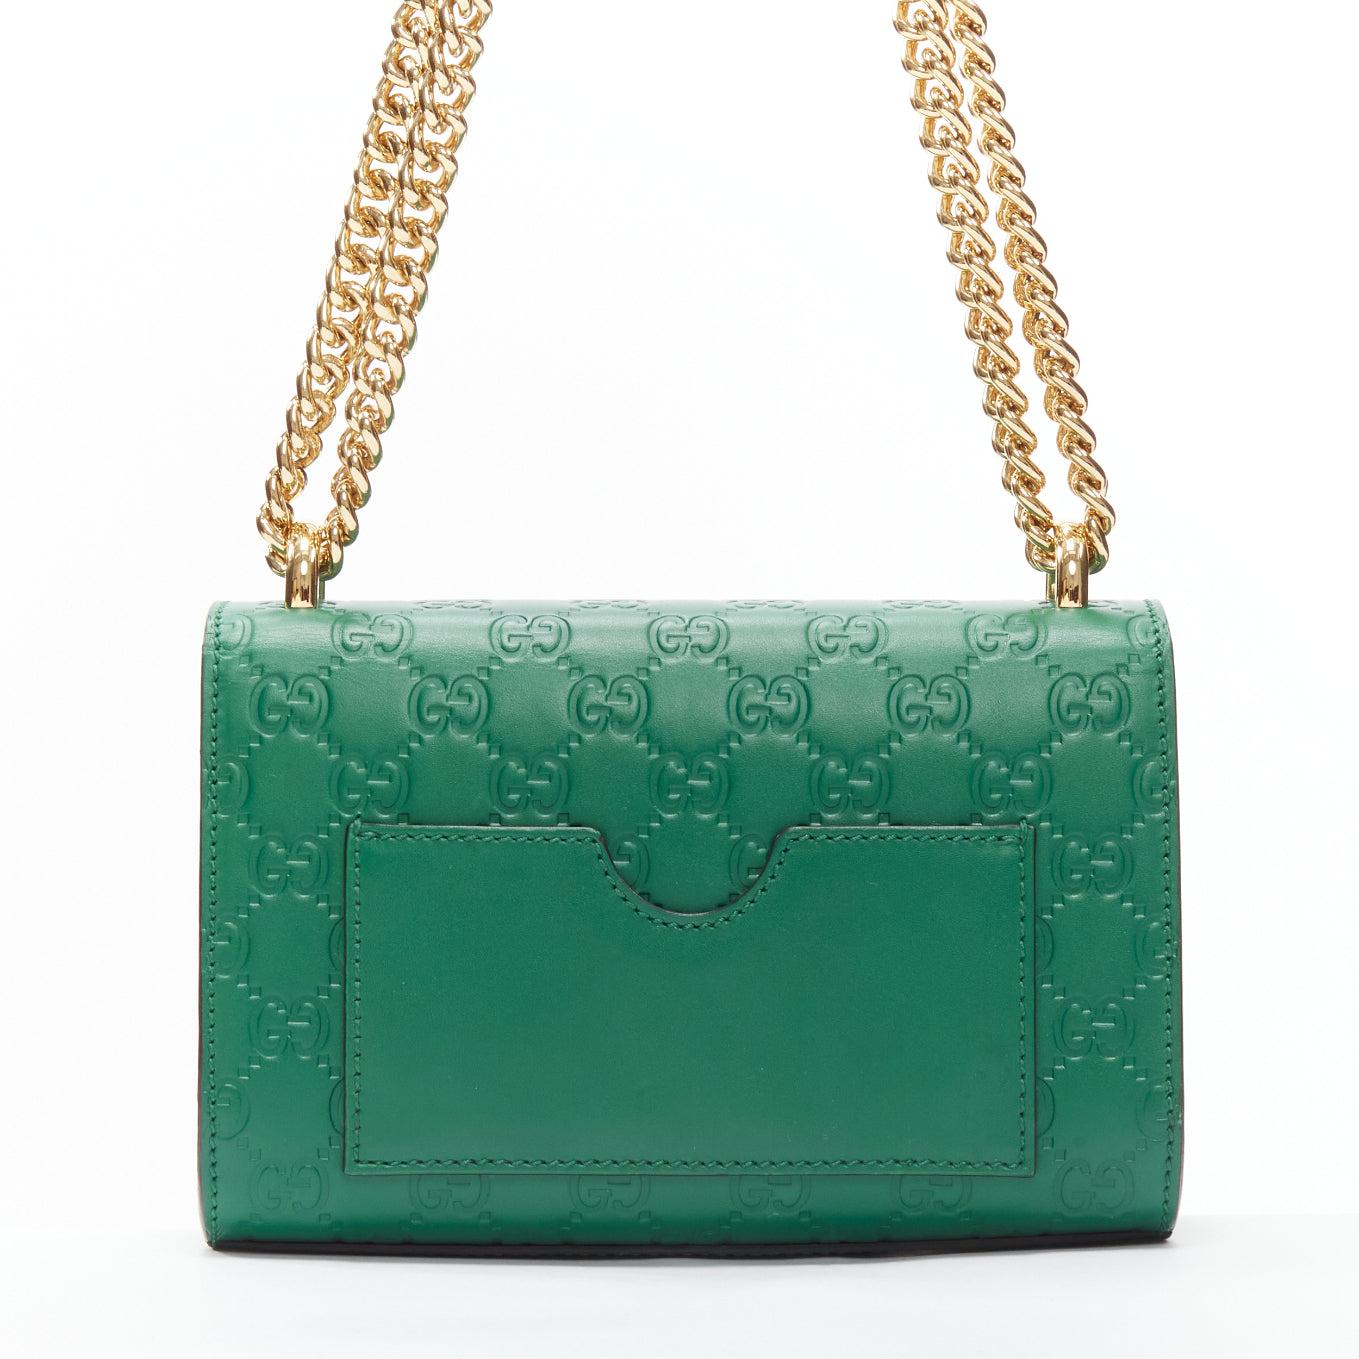 GUCCI Guccissima green leather gold padlock crossbody chain bag 1